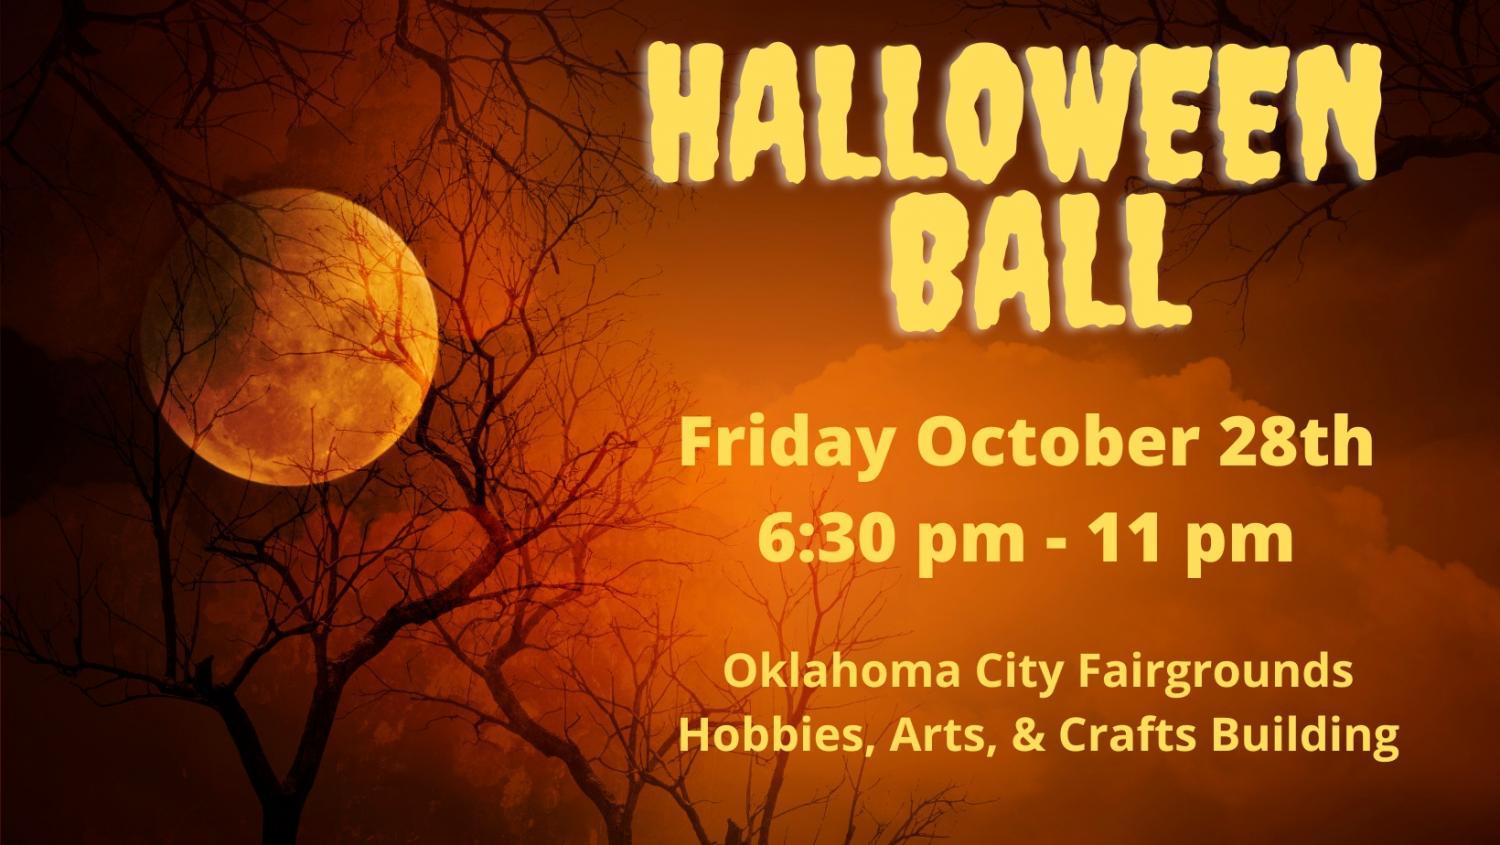 Halloween Ball
Fri Oct 28, 6:30 PM - Fri Oct 28, 11:00 PM
in 9 days